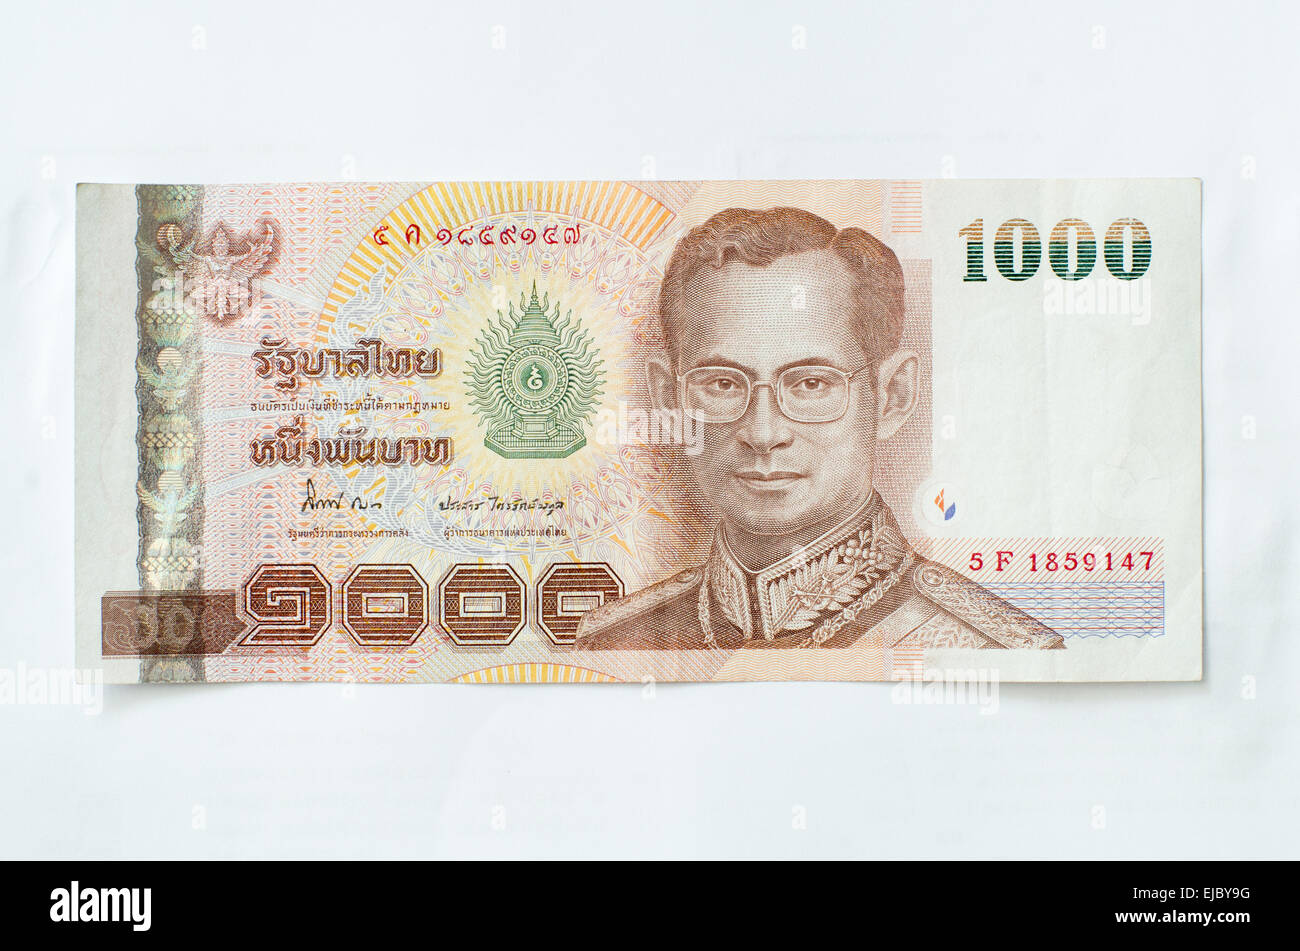 Cerca de Tailandia moneda baht tailandés Foto de stock